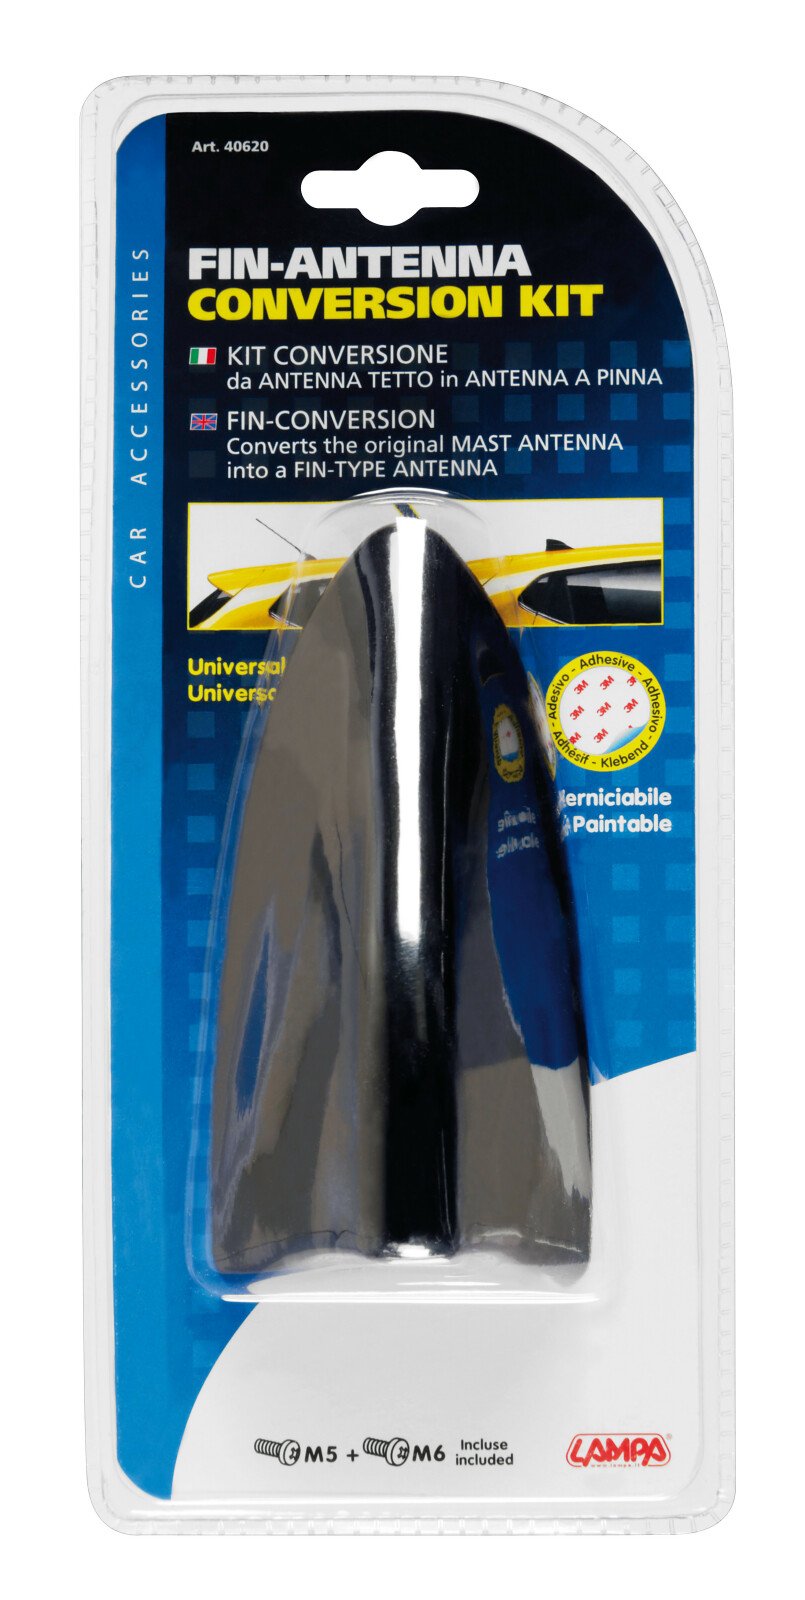 Fin-antenna conversion kit - Resealed thumb